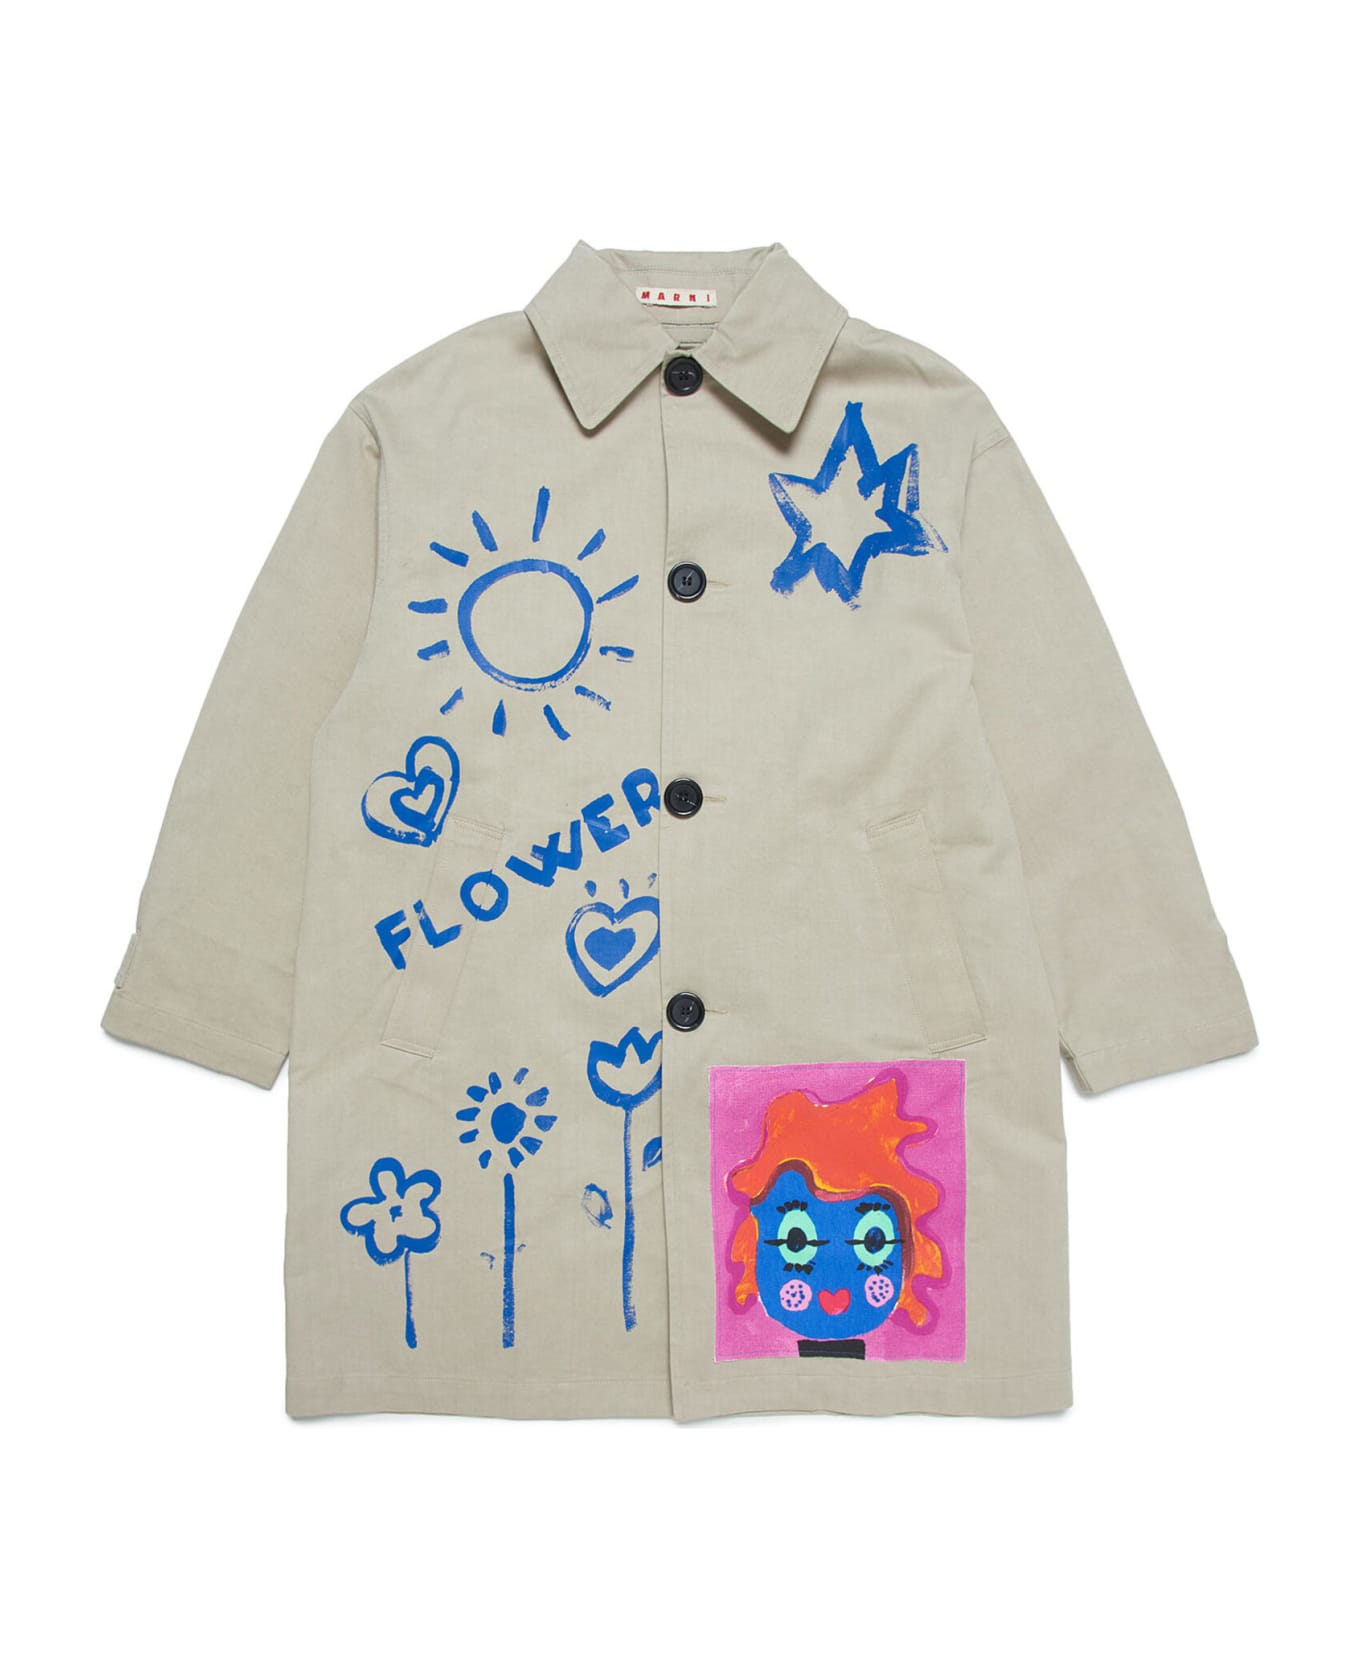 Marni Mj109f Jacket Marni Beige Gabardine Coat With Graffiti And Printed Faces - Light sand